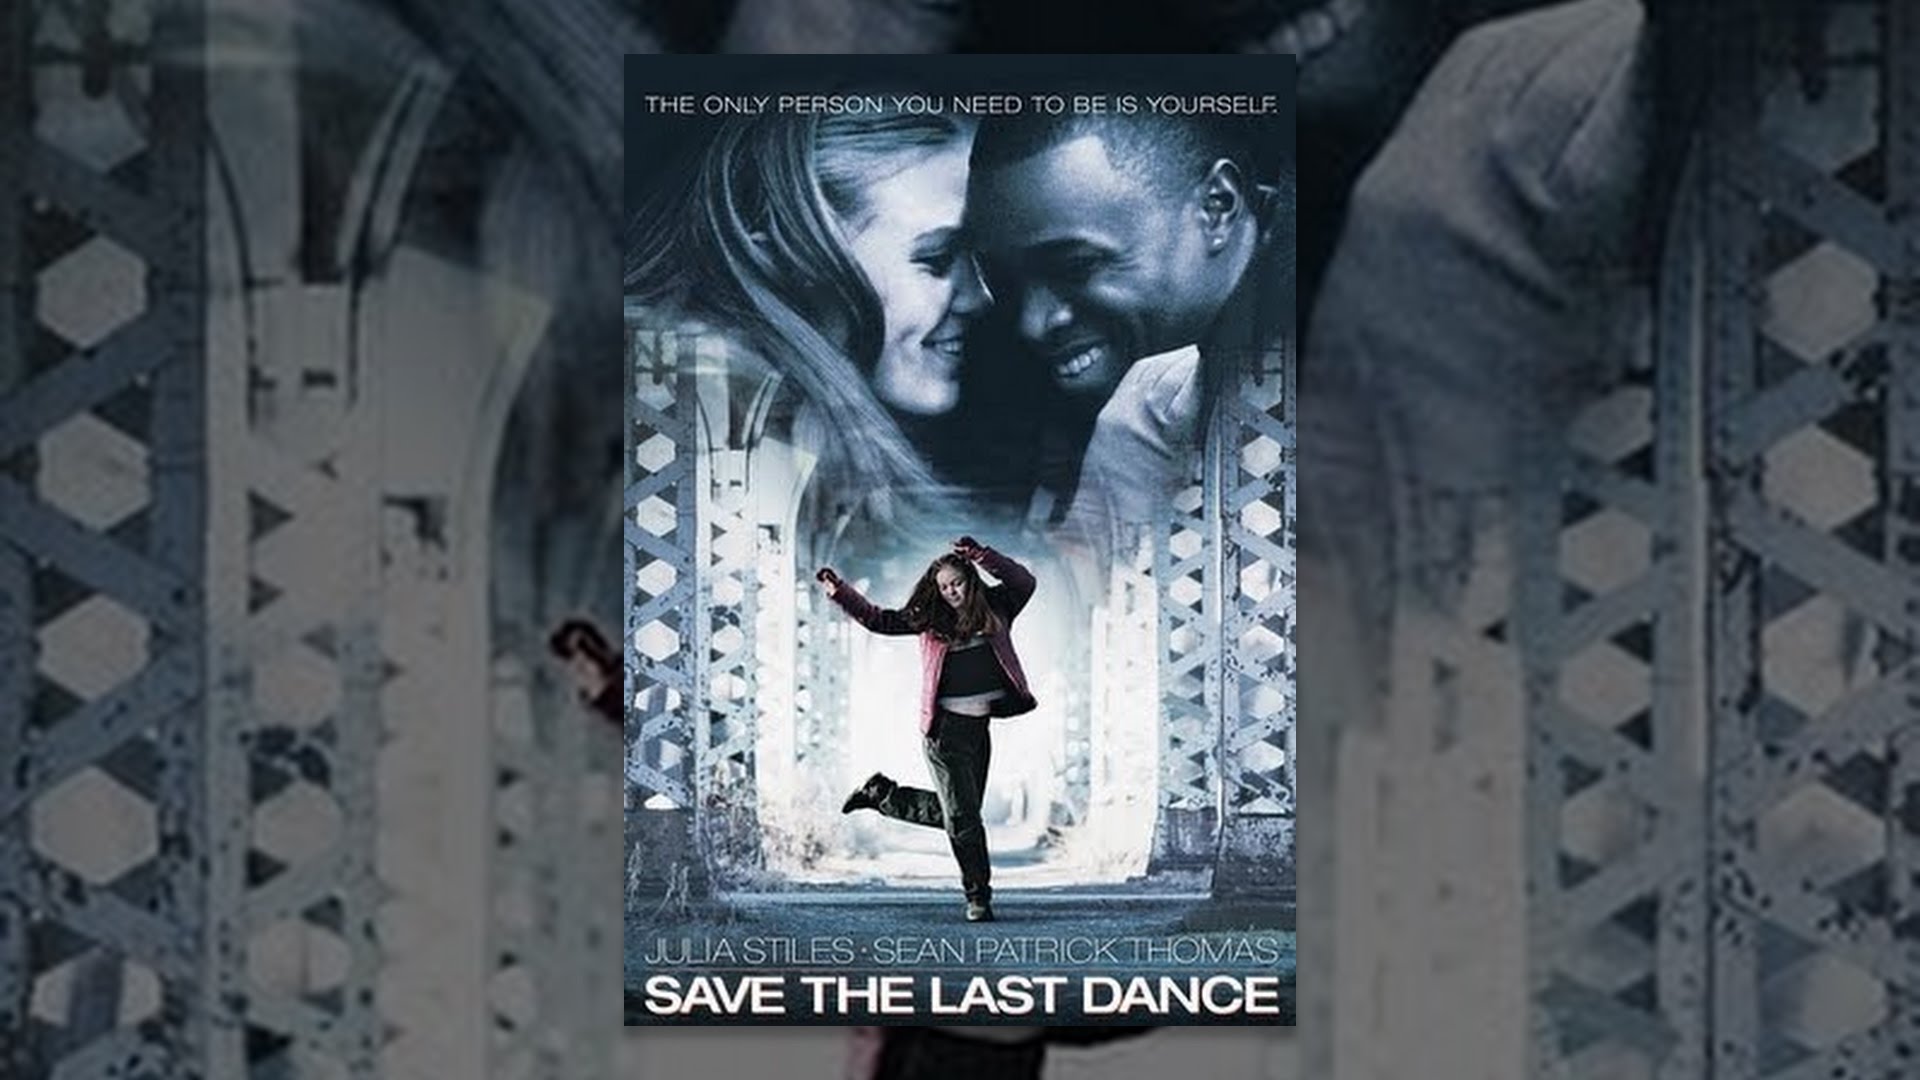 Save the last dance (2001) plot. 